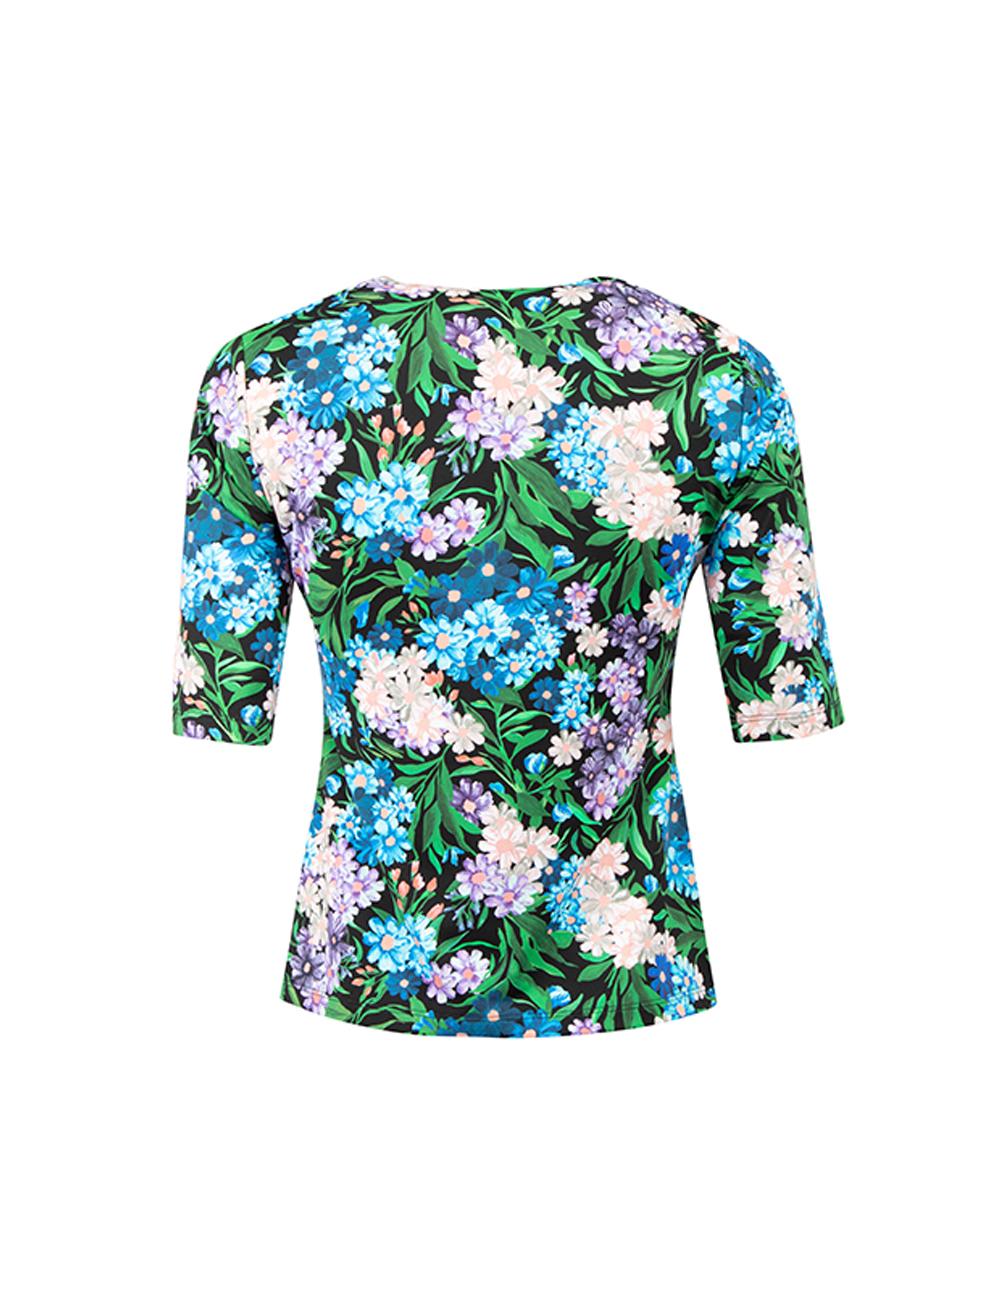 Blue Balenciaga Women's Floral Pattern Mid Sleeves Top